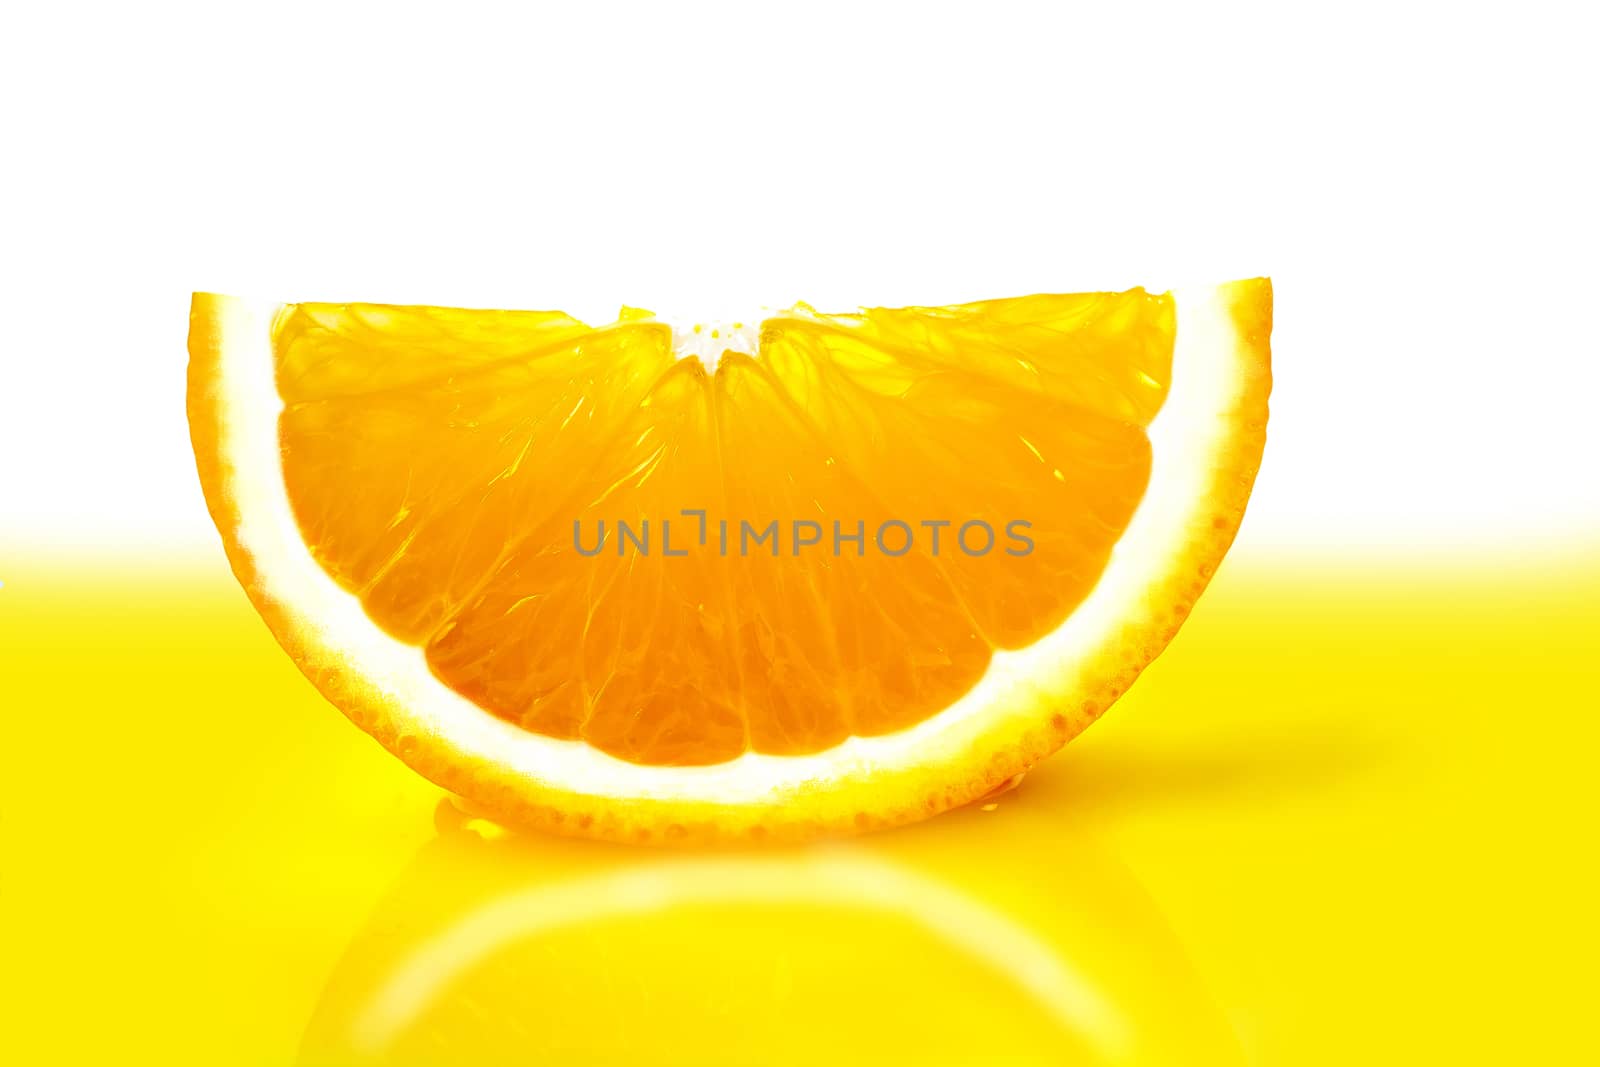 ripe orange slice close-up lying in the yellow juice